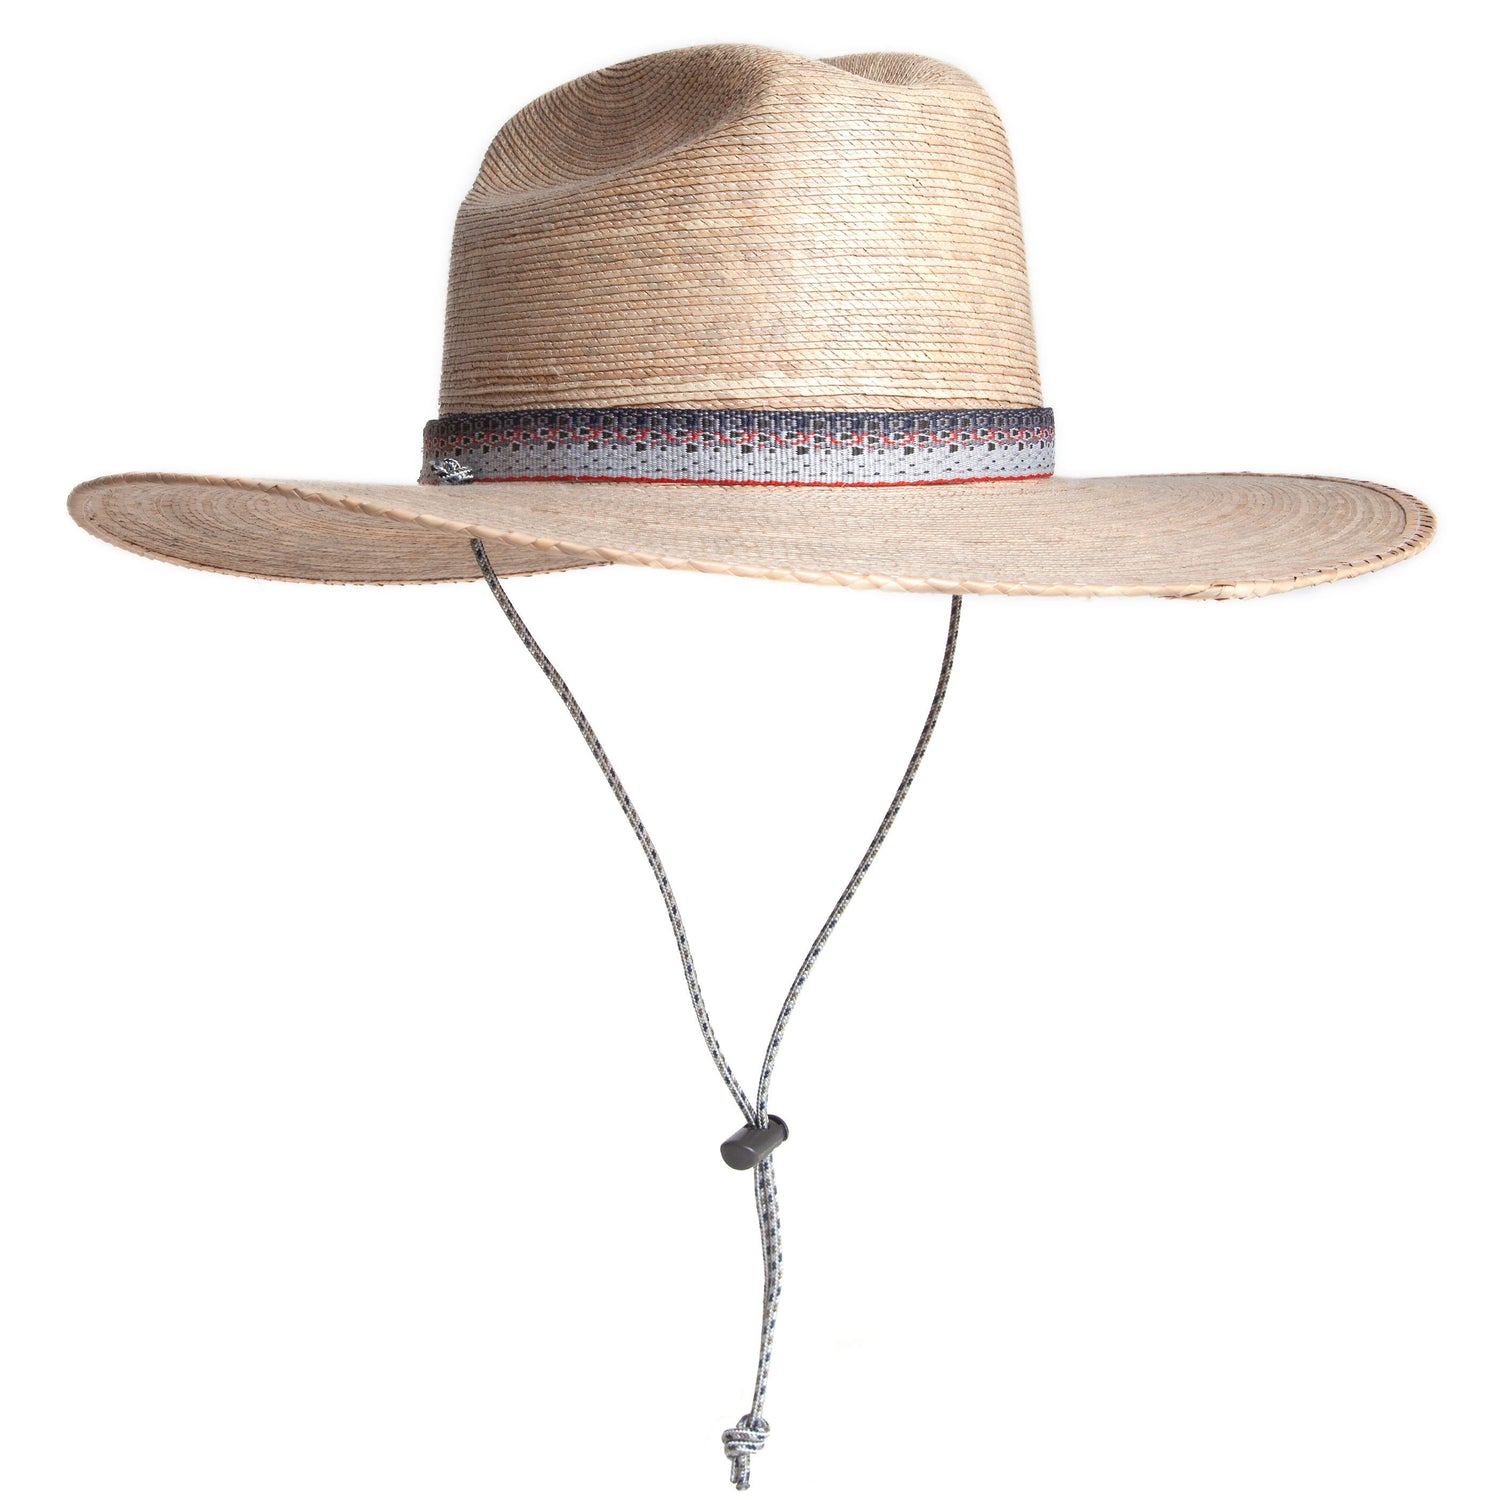 Maori Trout Lightweight Hat – Fishpond